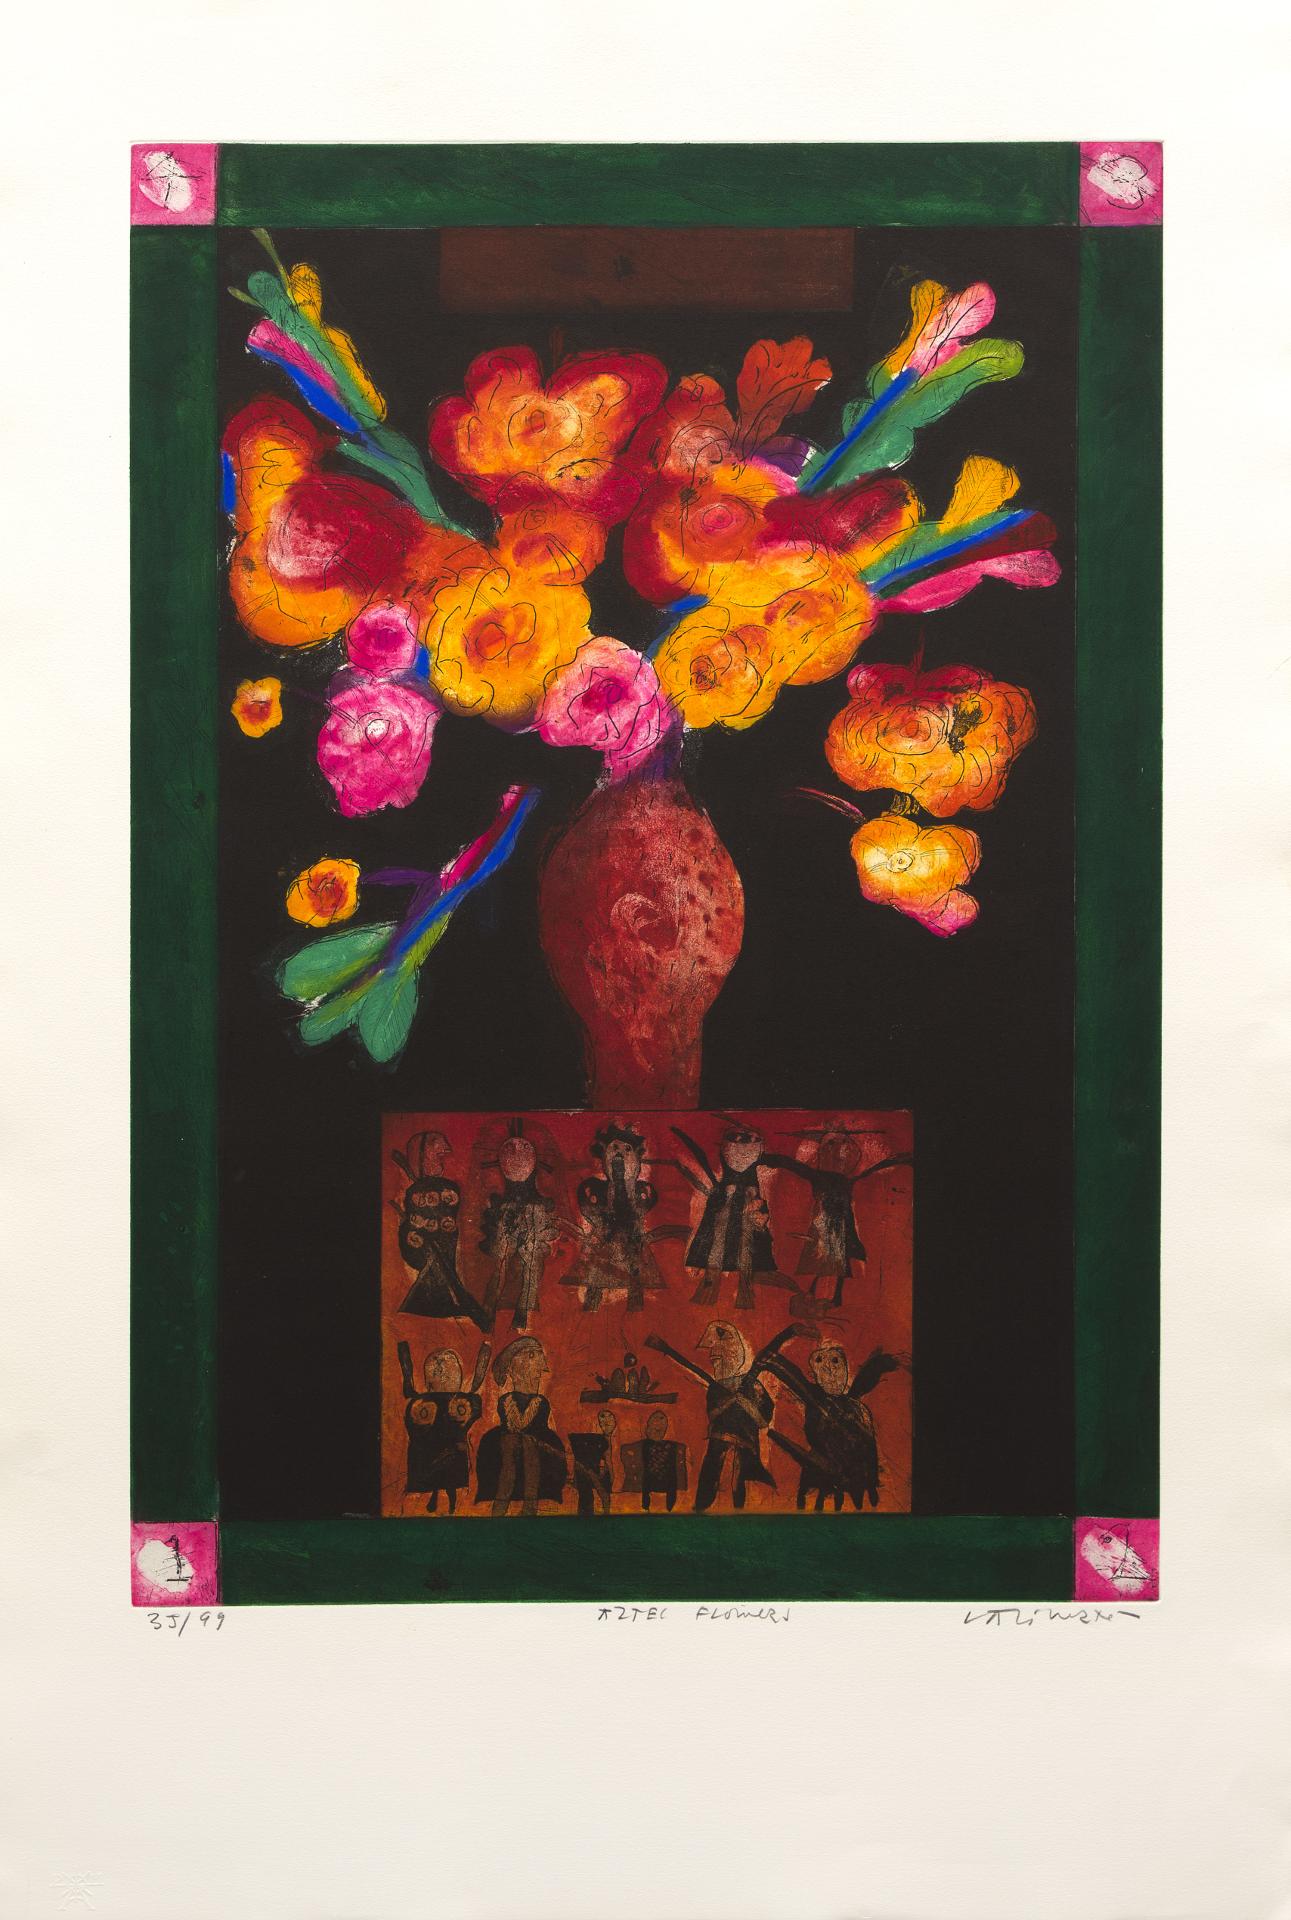 Norman Laliberte (1925-2021) - Aztec Flowers, c. 1991